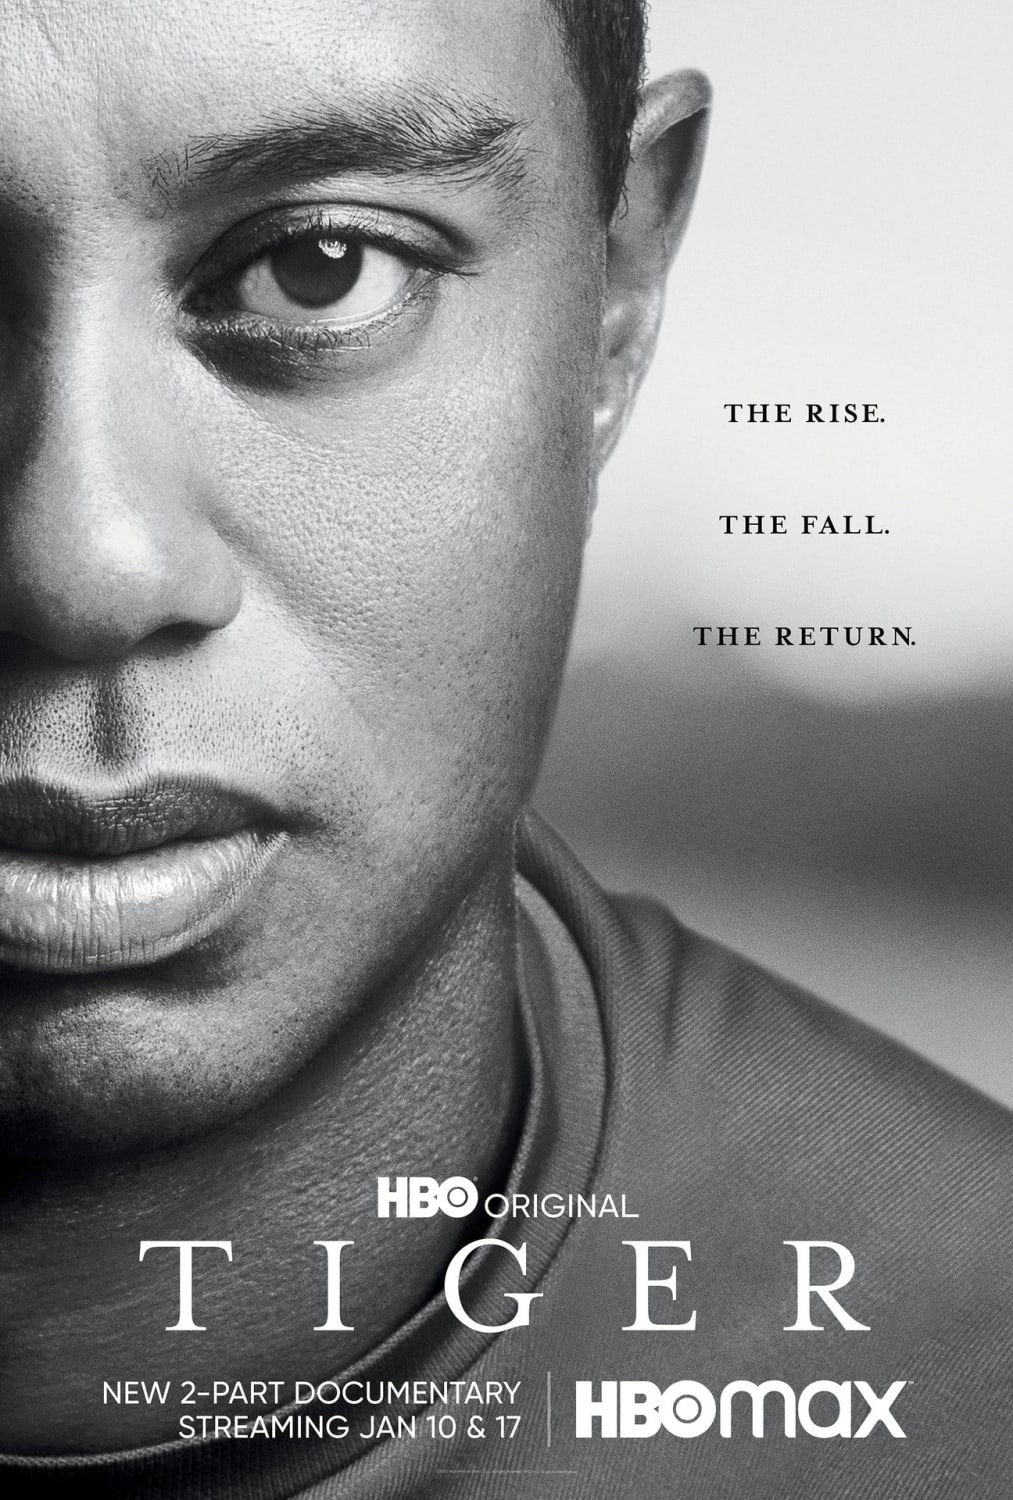 HBO film seeks a look behind Tiger Woods' public persona